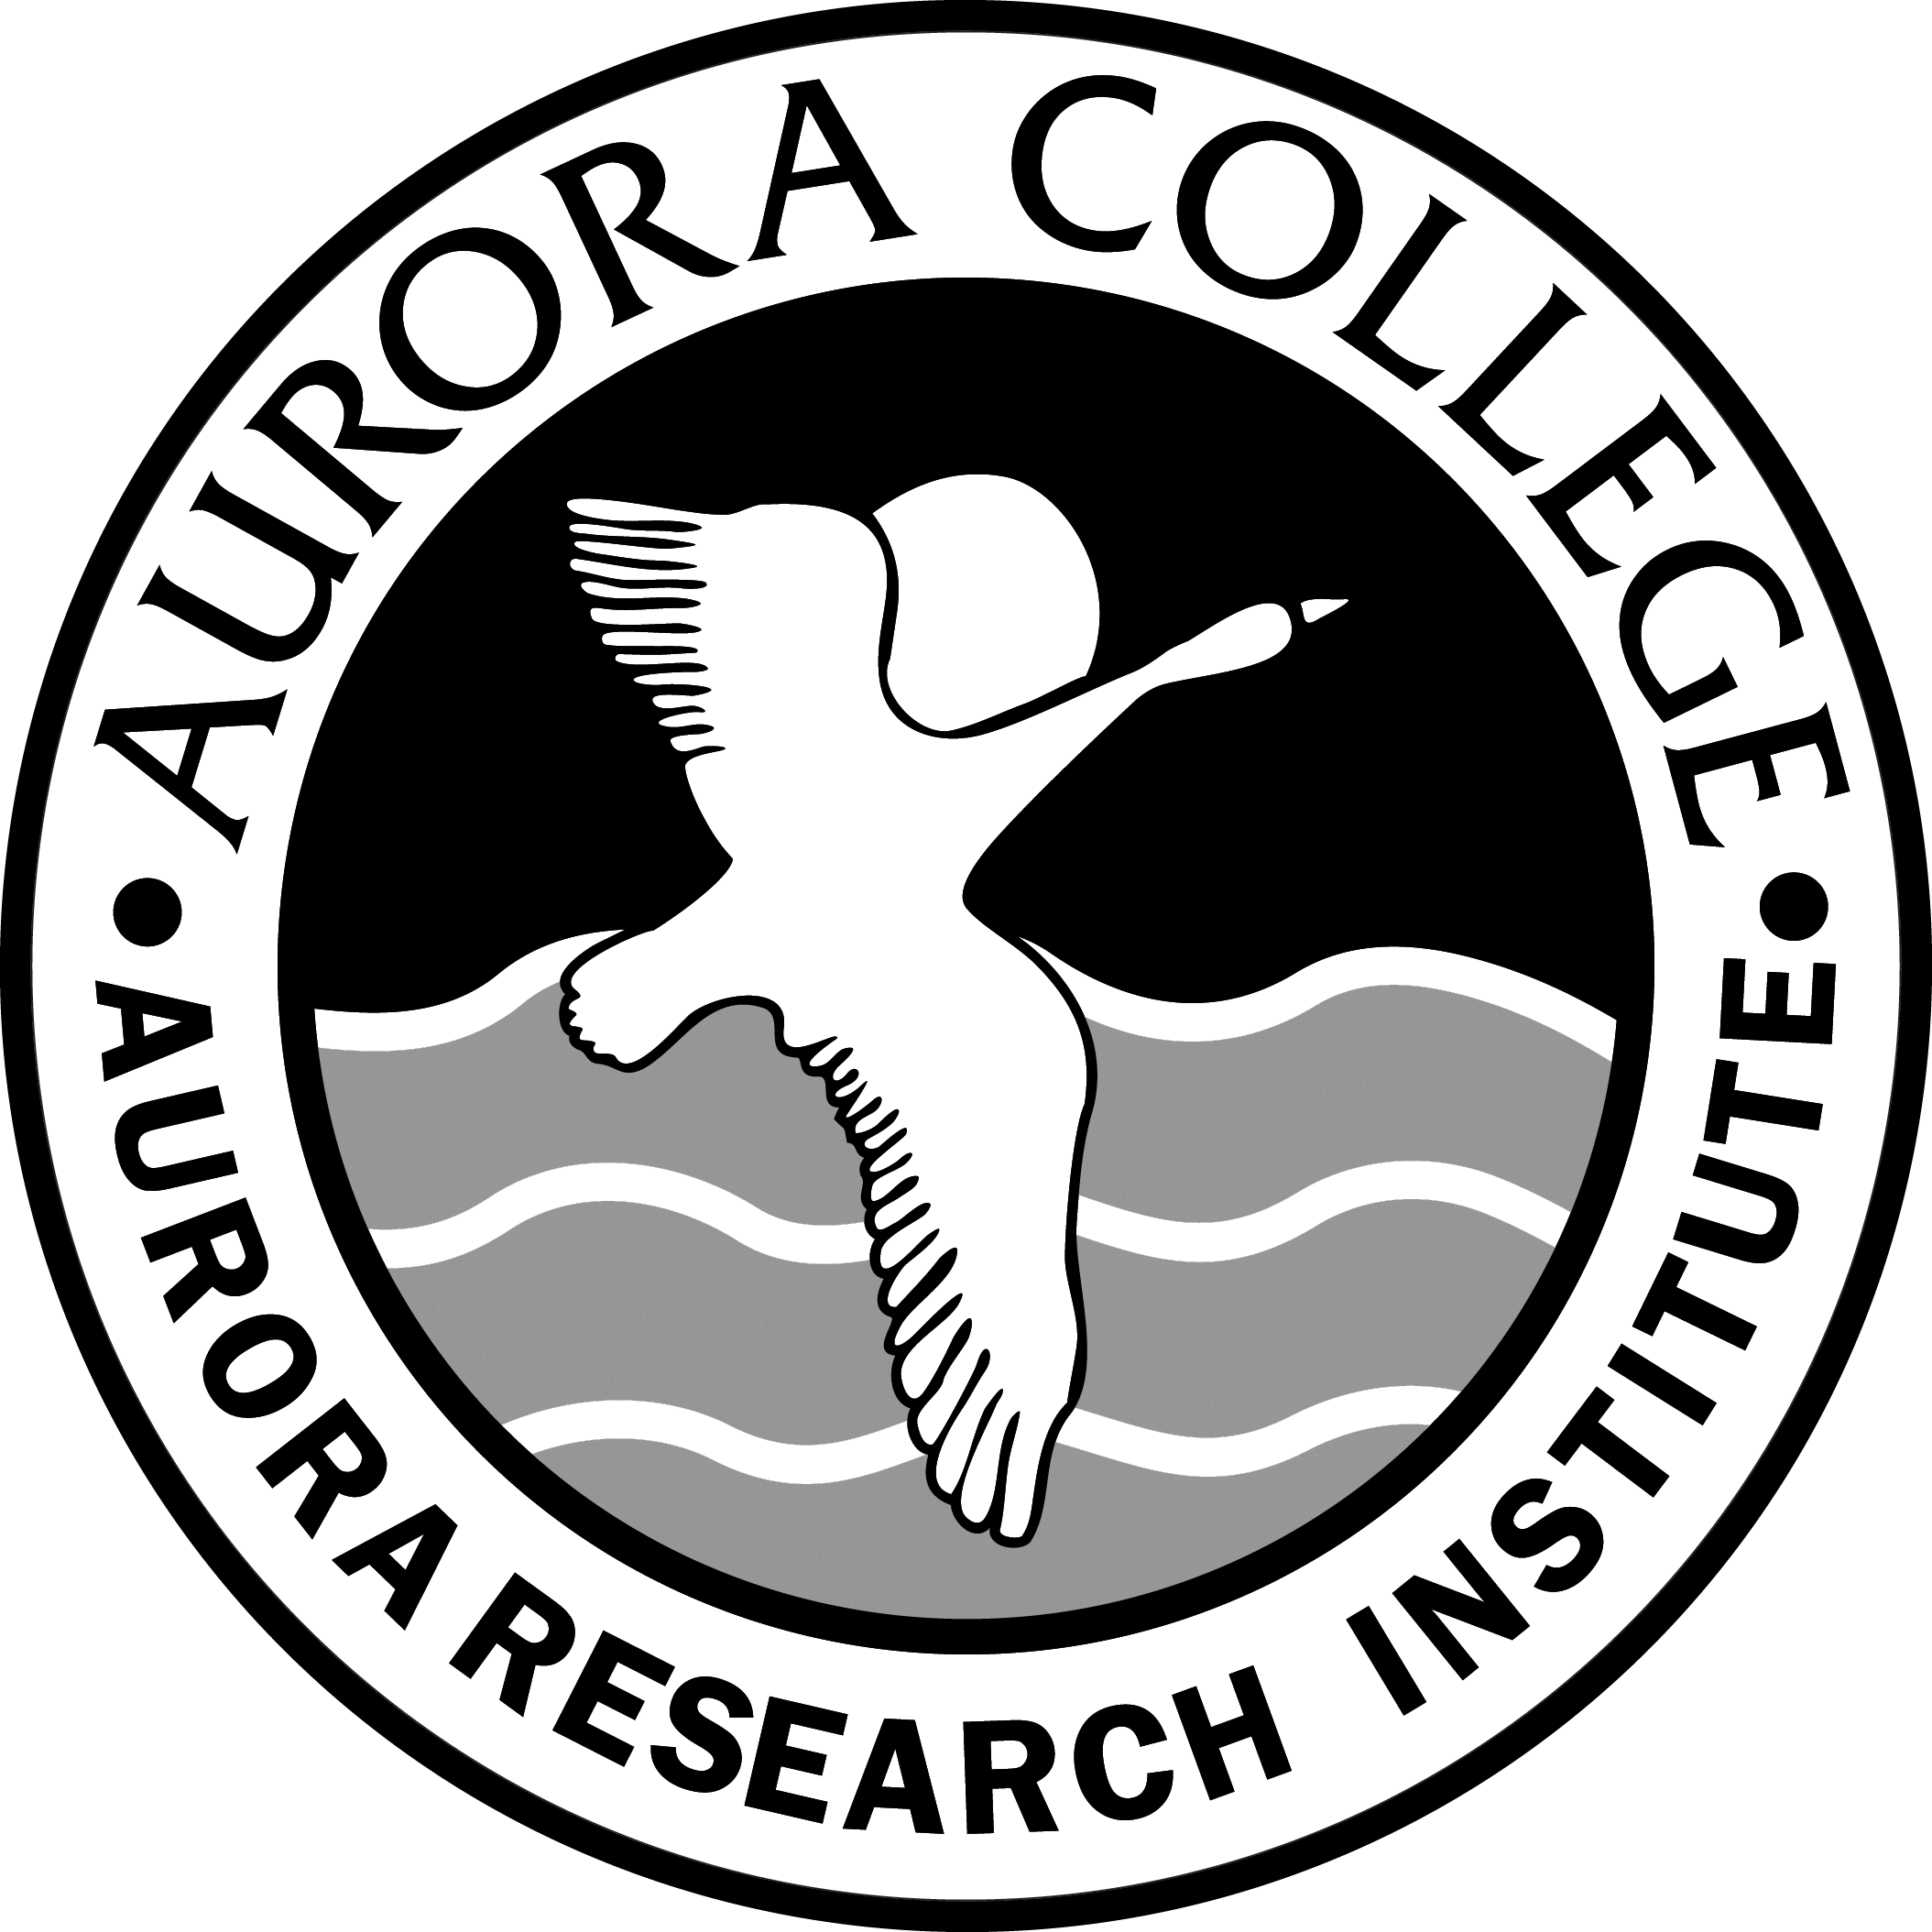 Google Circular Logo - Logos | Aurora Research Institute